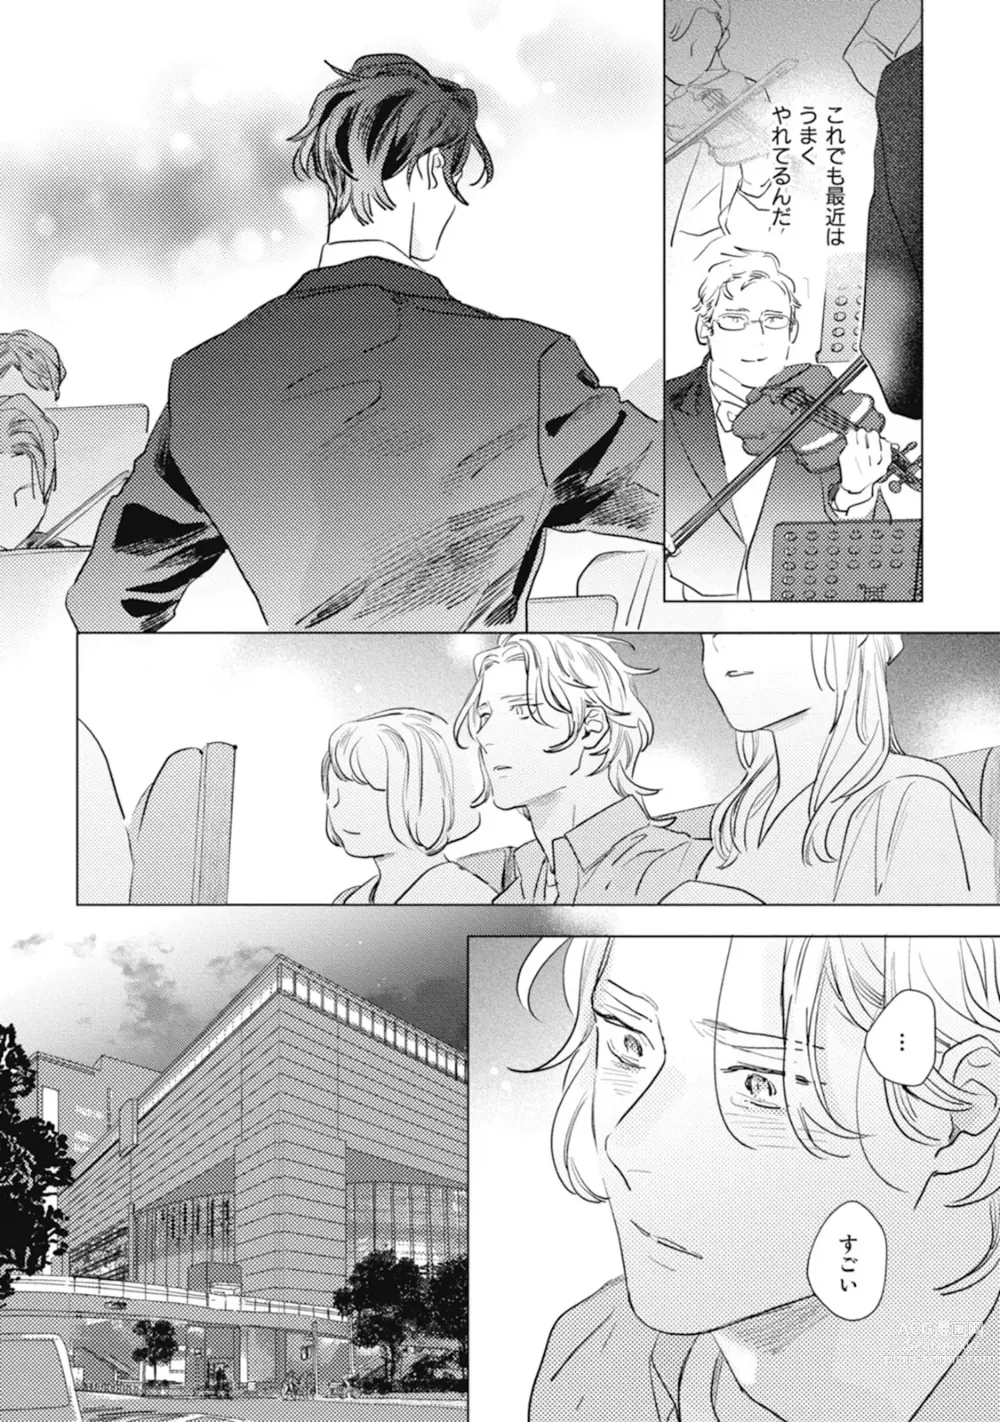 Page 200 of manga Kurikaeshi Ai no Oto